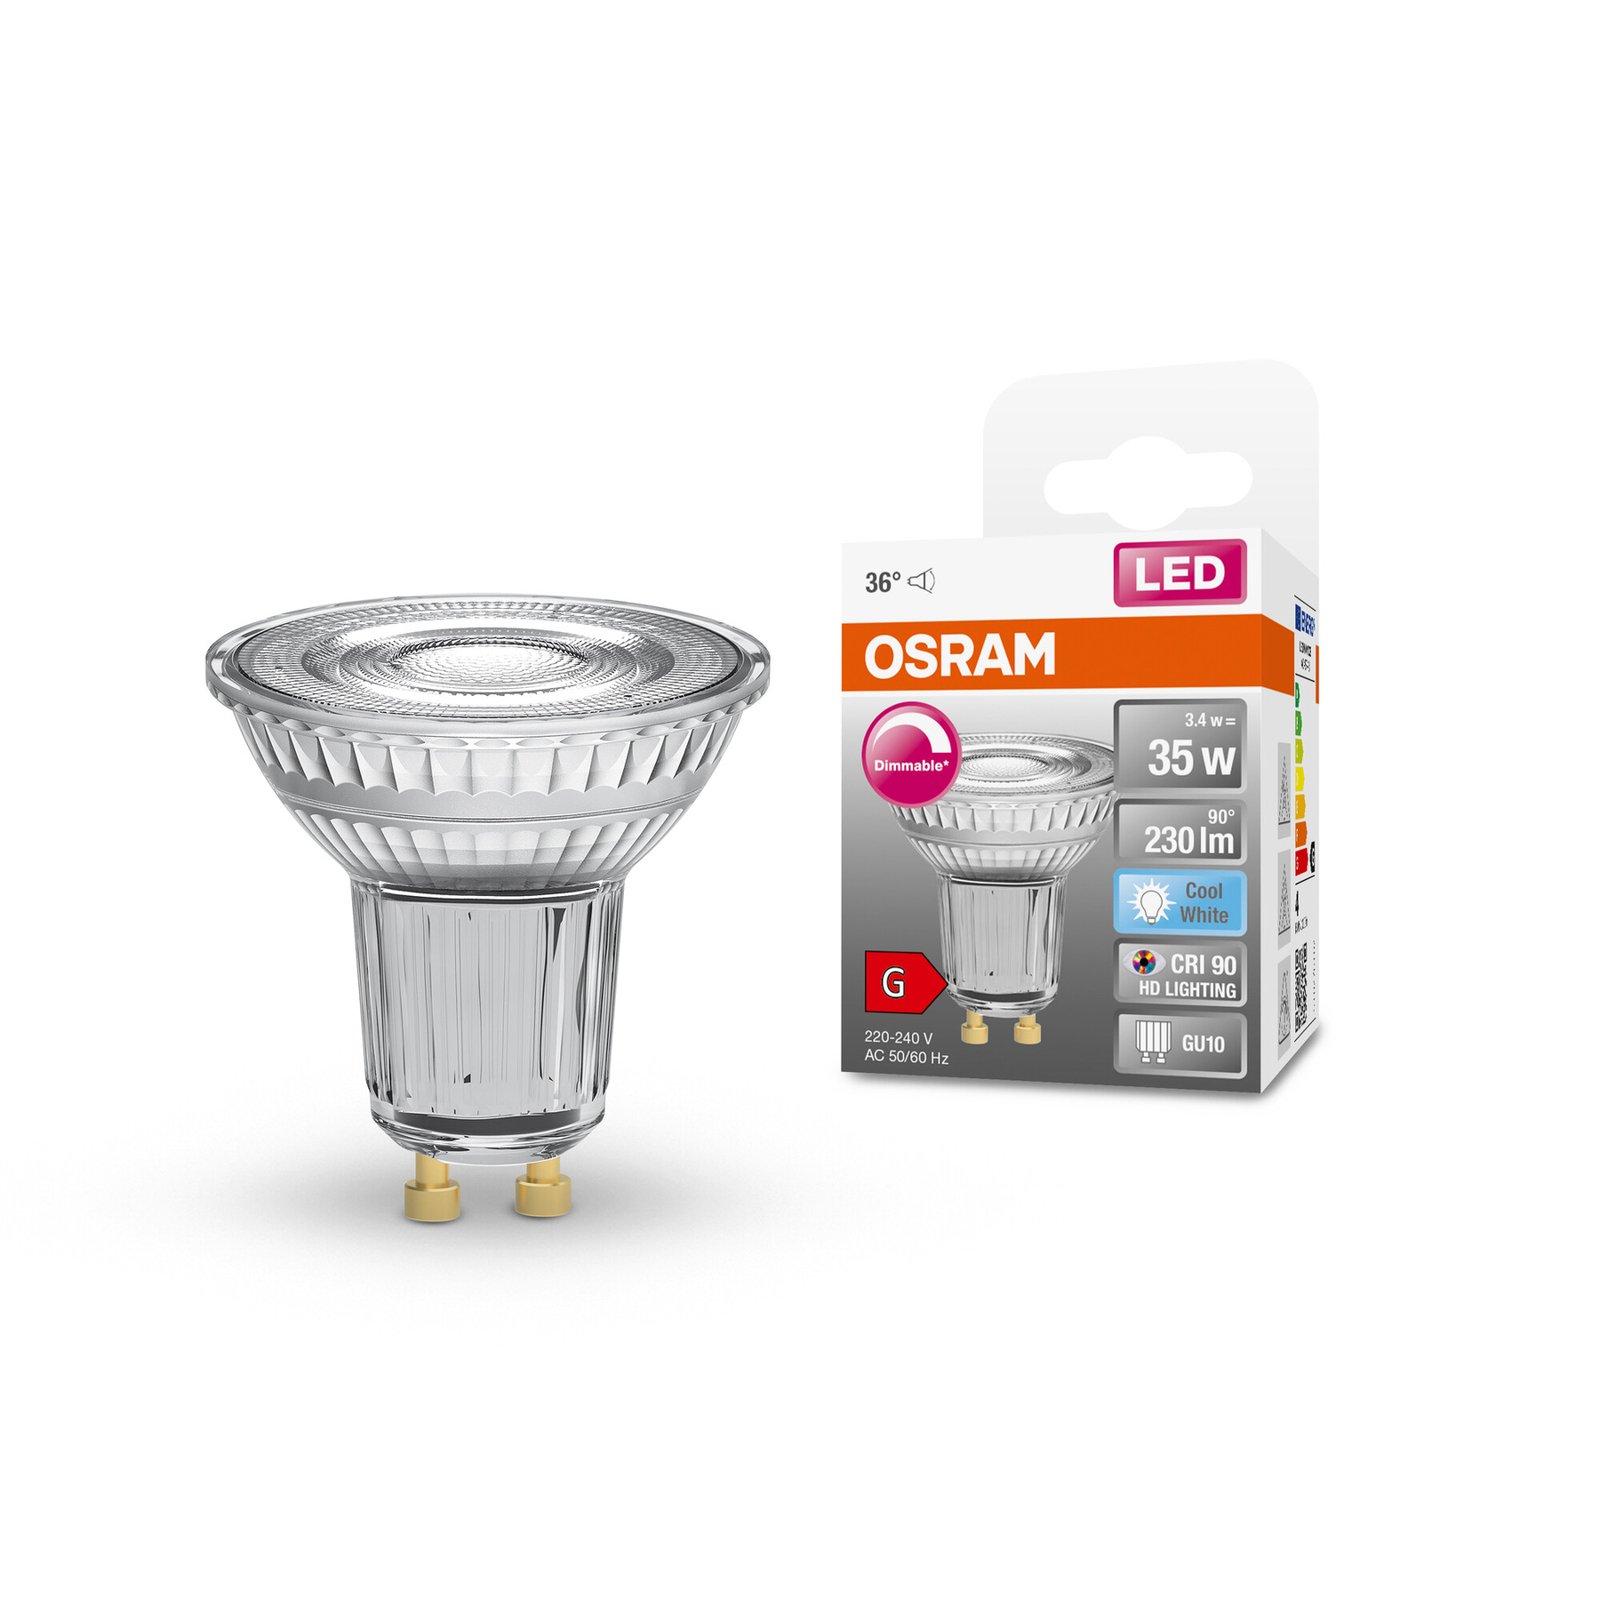 OSRAM LED reflektor 3,4W 940 36° 230lm stmívatelný